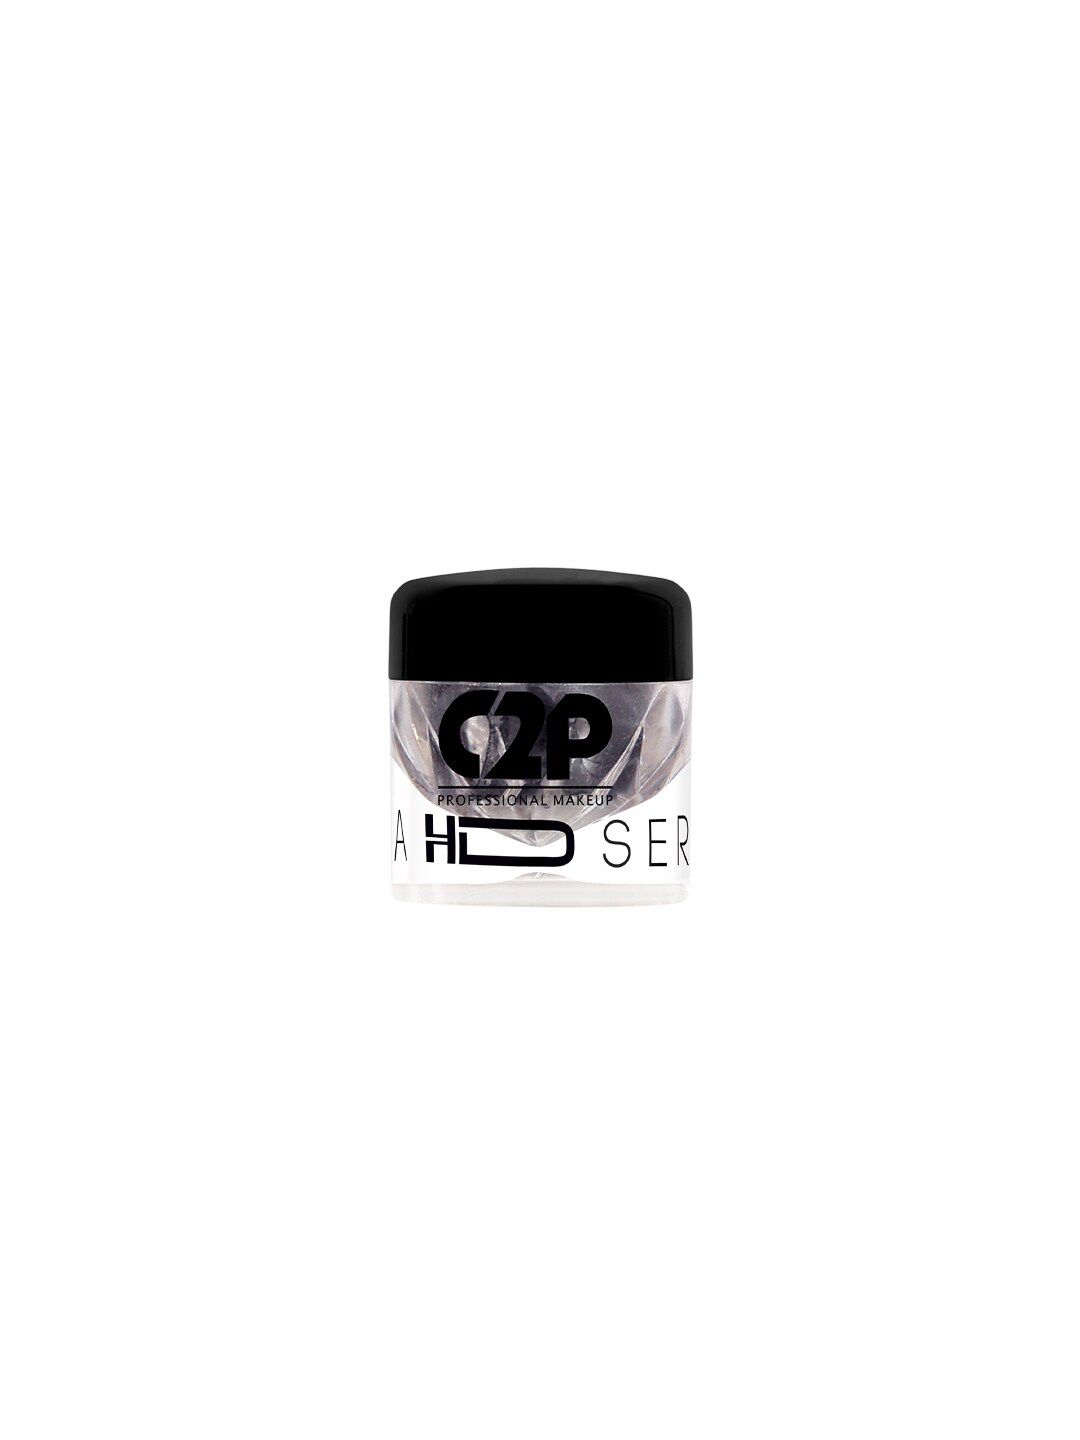 C2P PROFESSIONAL MAKEUP HD Loose Precious Pigments 2 g - Black Diamond 241 Price in India